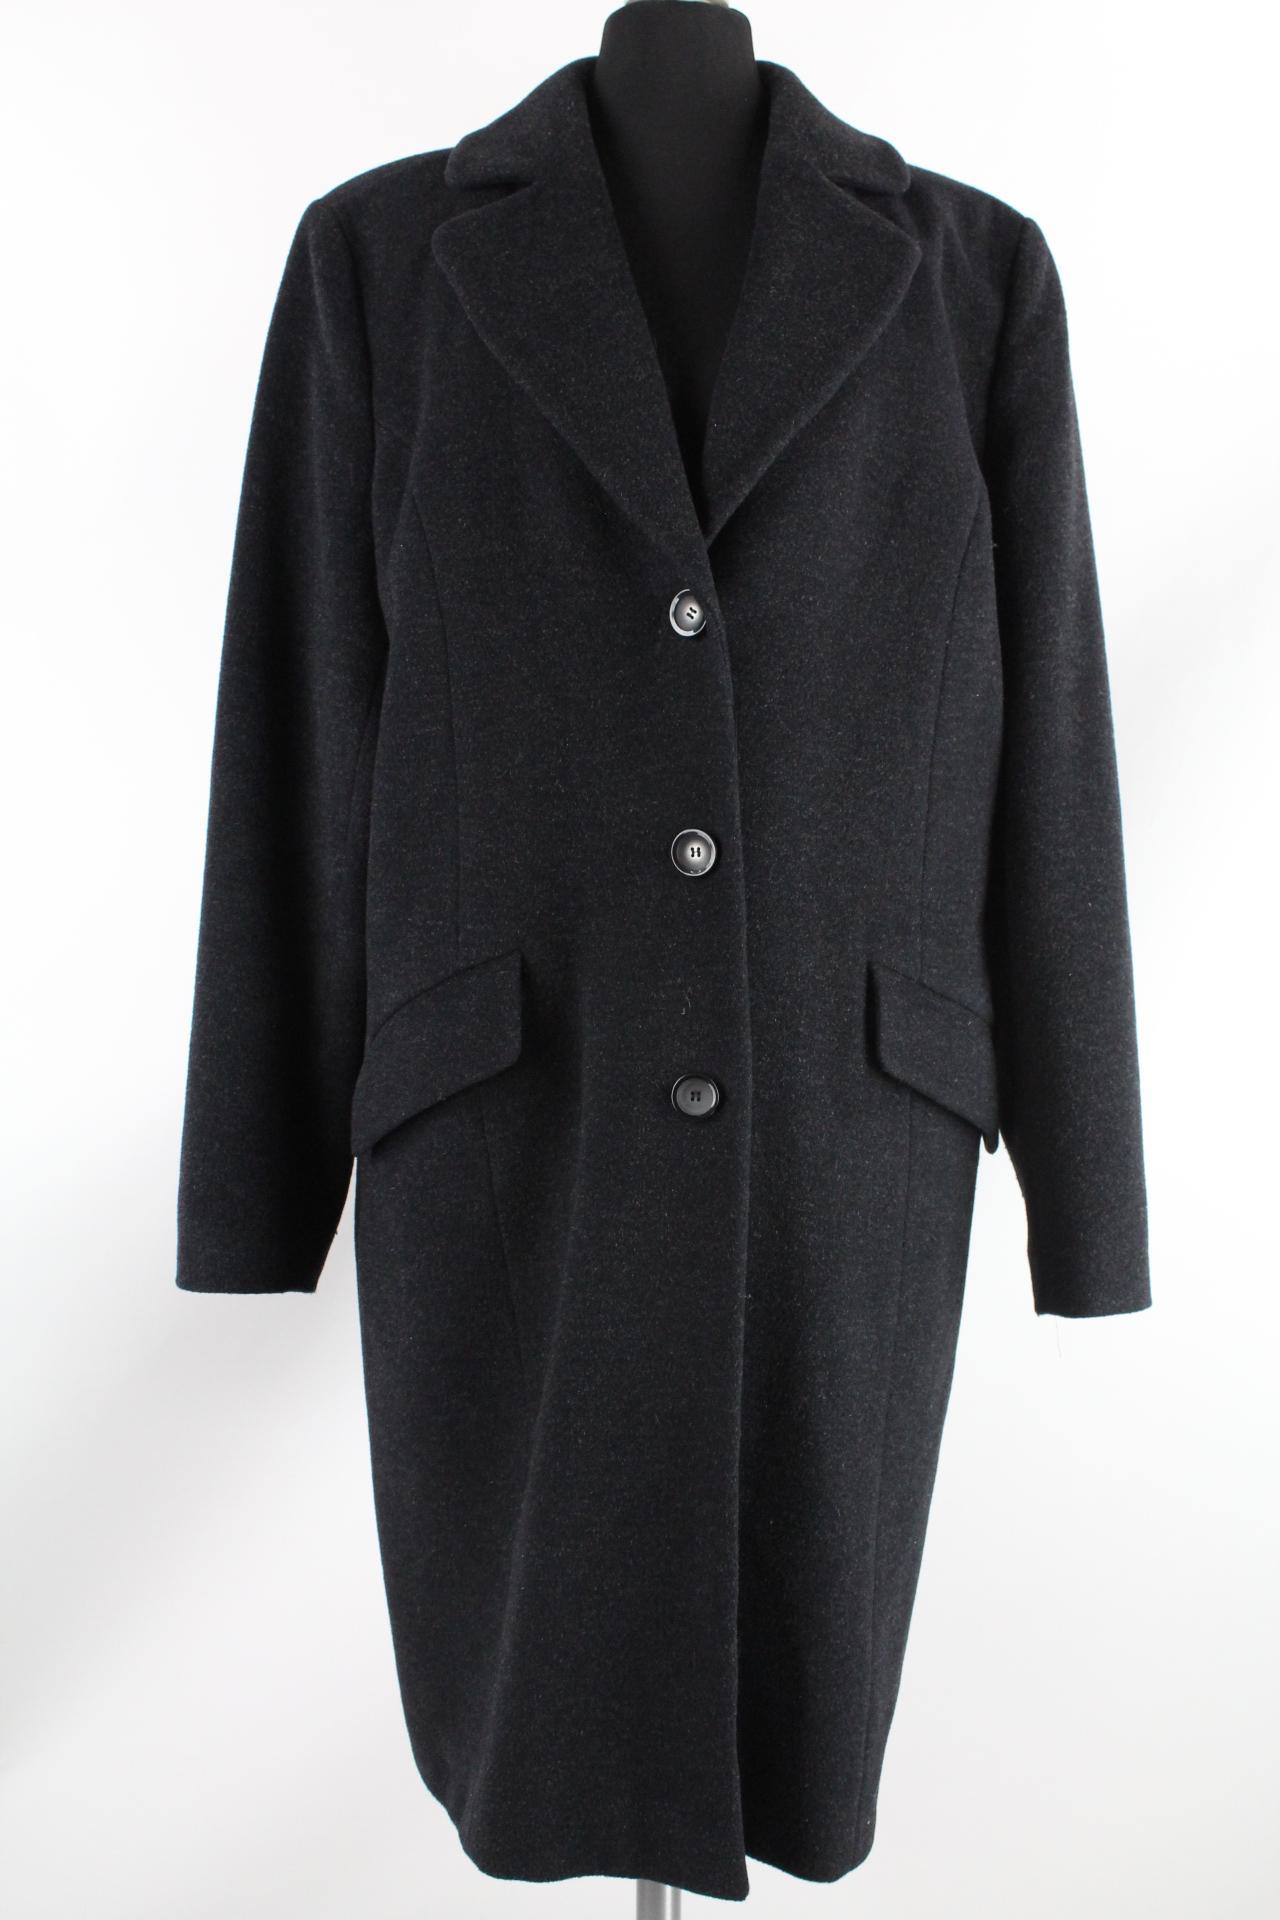 C&A Damen-Mantel schwarzgrau Größe 40